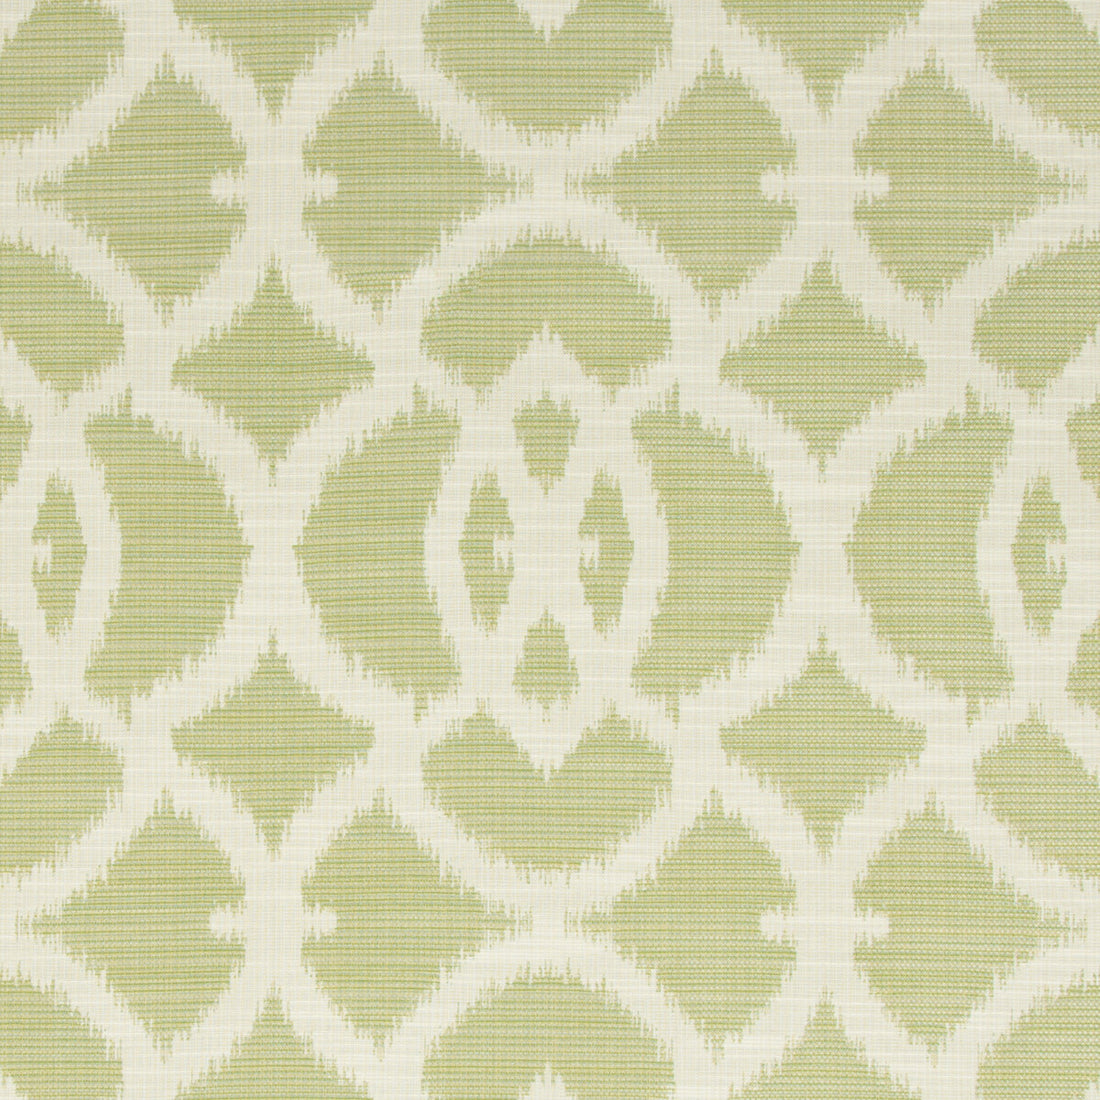 Kravet Design fabric in 34721-13 color - pattern 34721.13.0 - by Kravet Design in the Gis collection